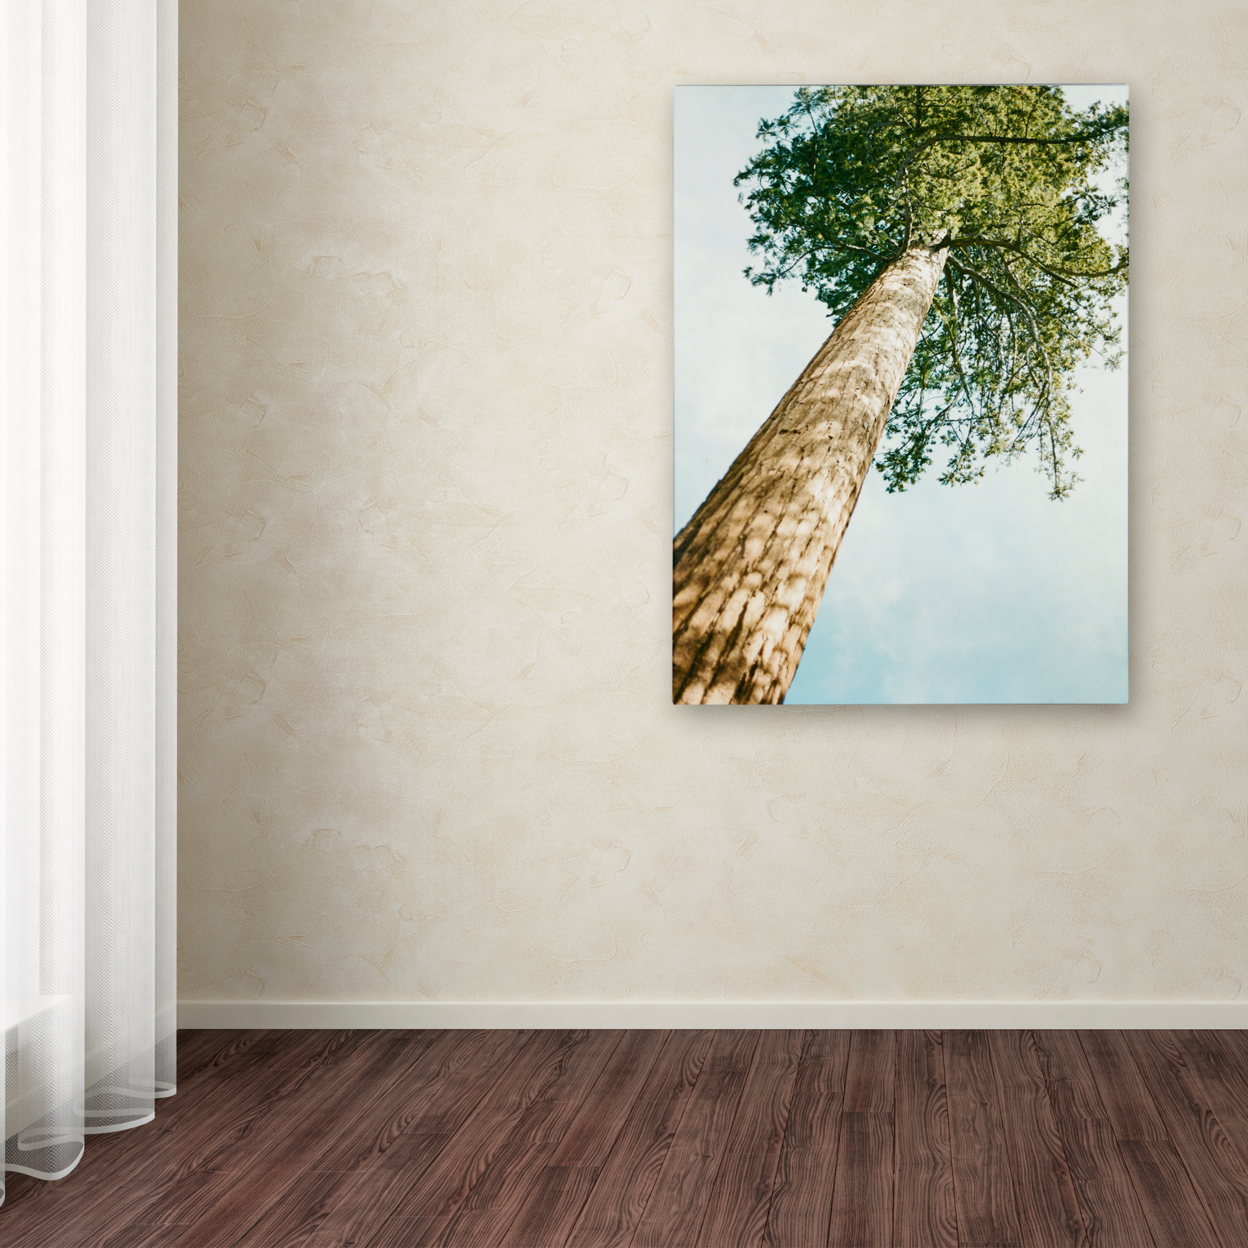 Ariane Moshayedi 'Giant Tree' Canvas Wall Art 35 X 47 Inches